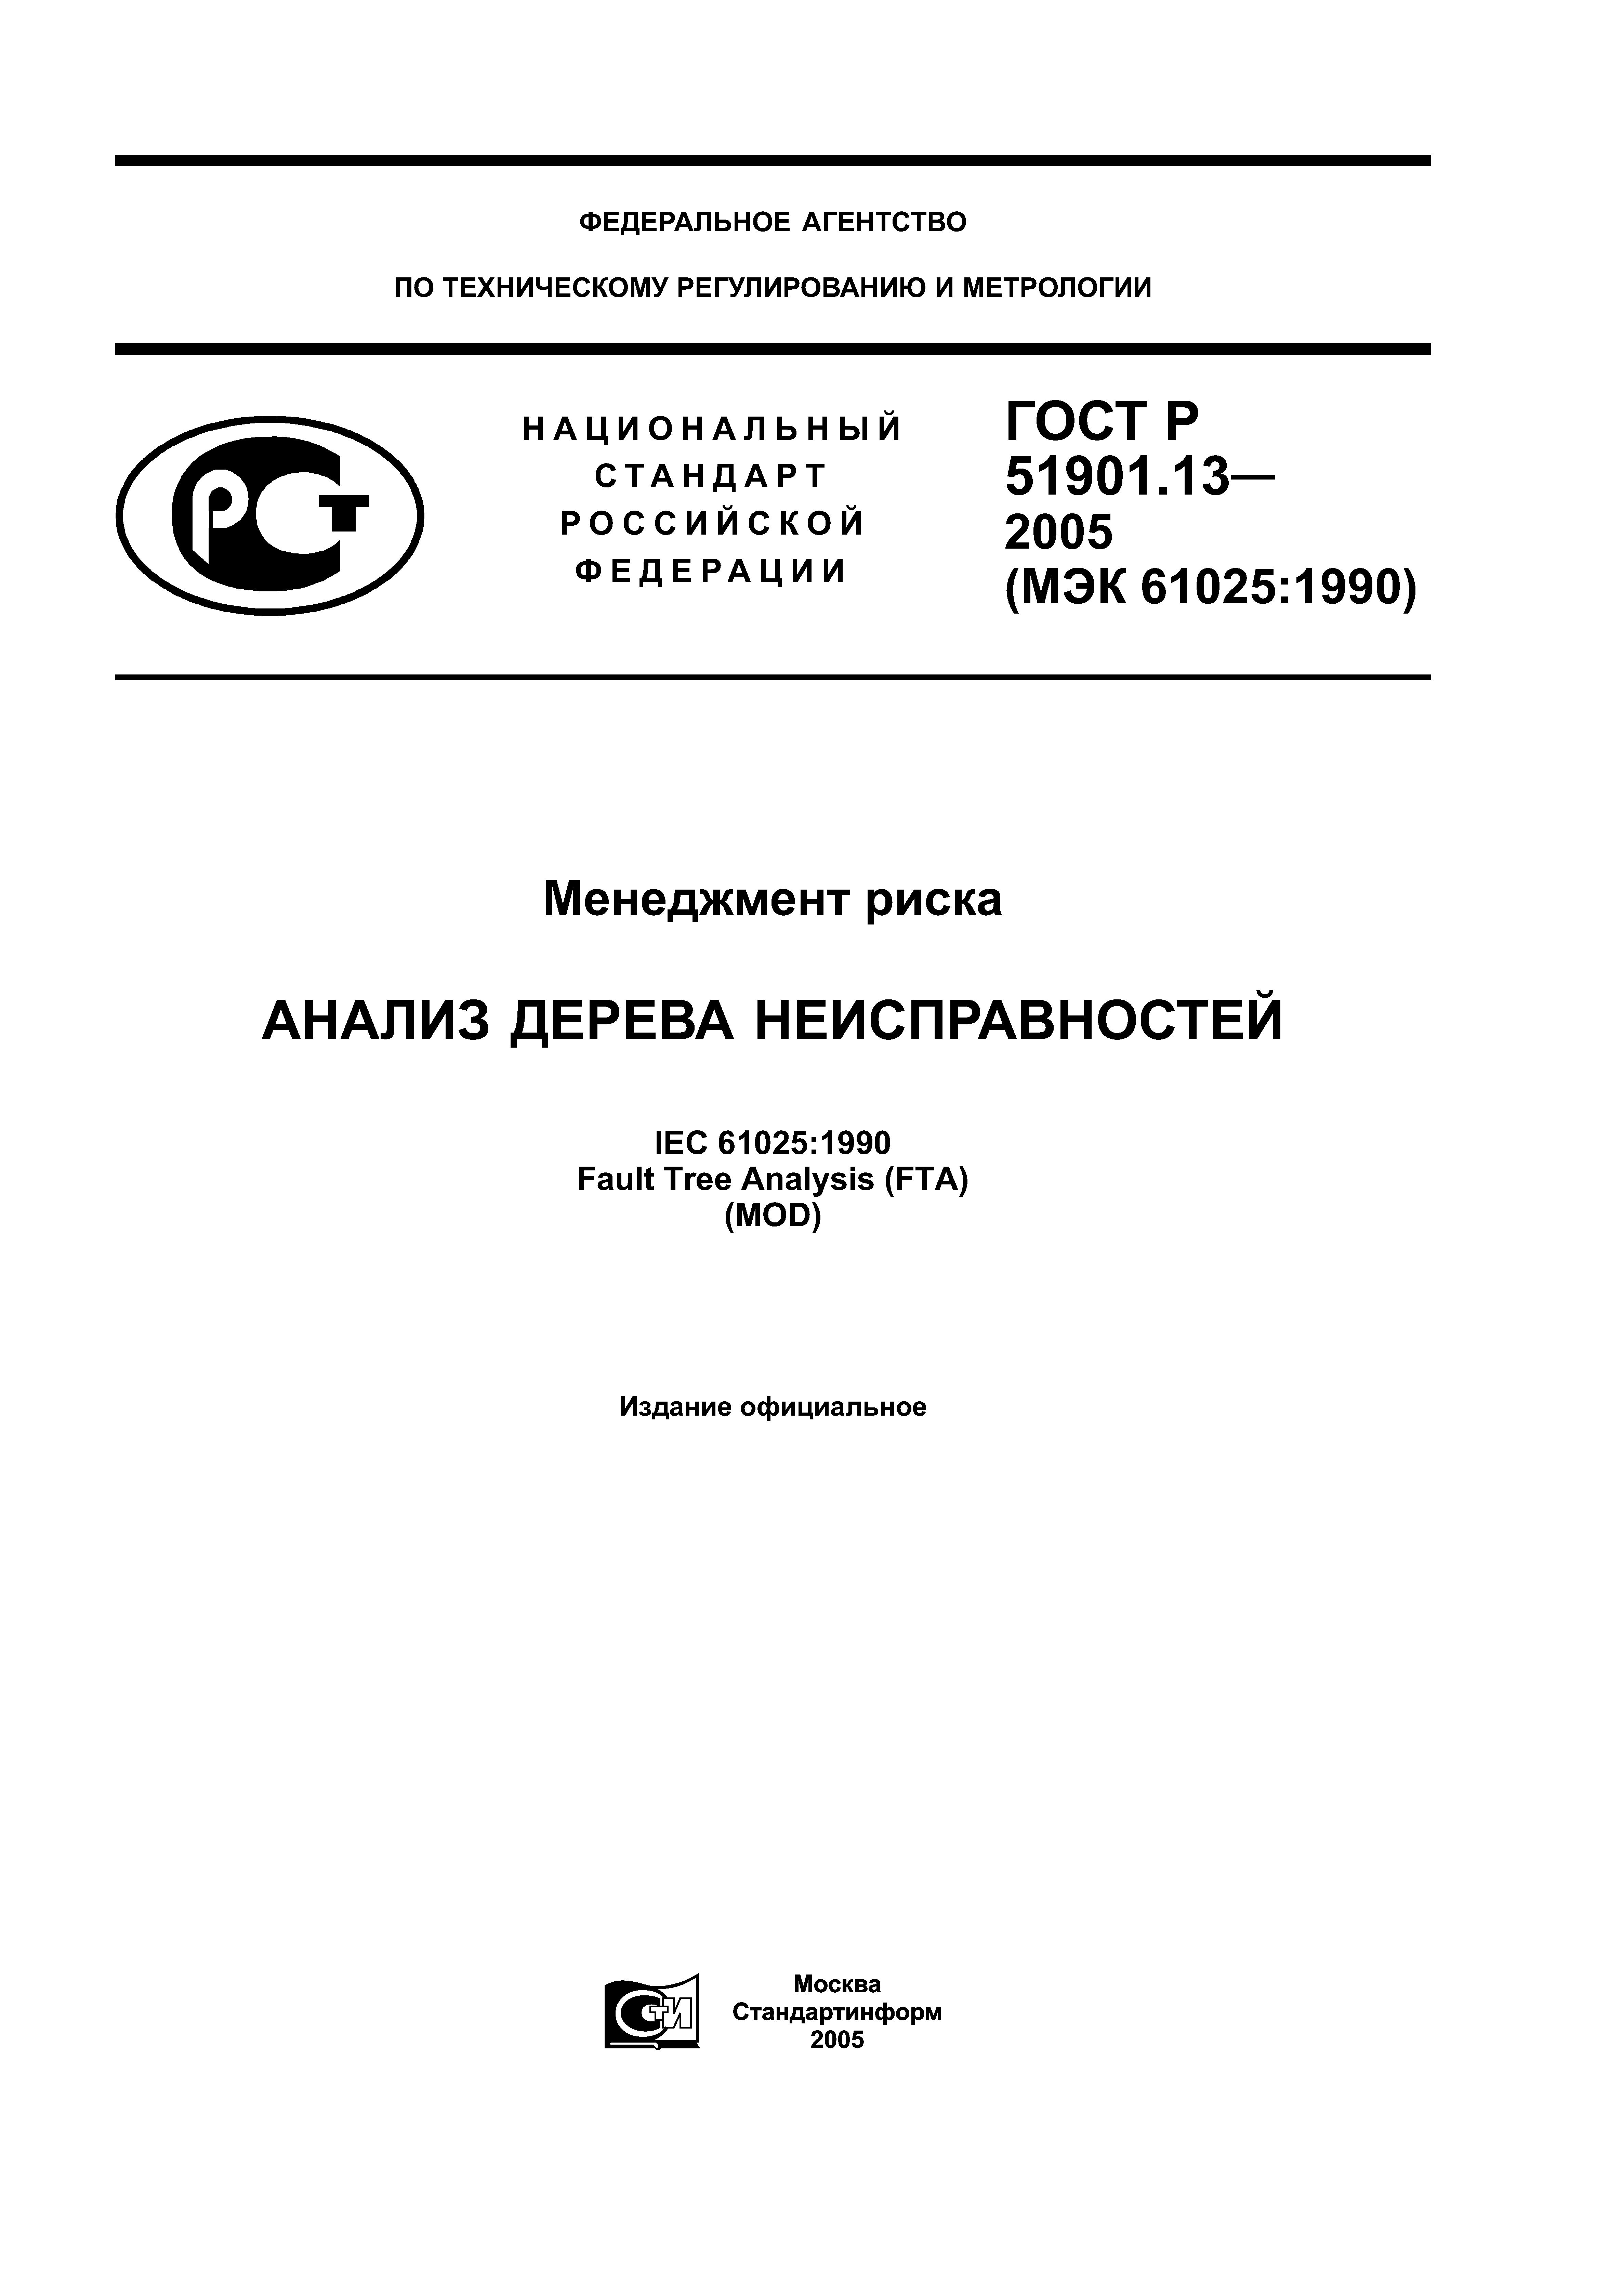 ГОСТ Р 51901.13-2005